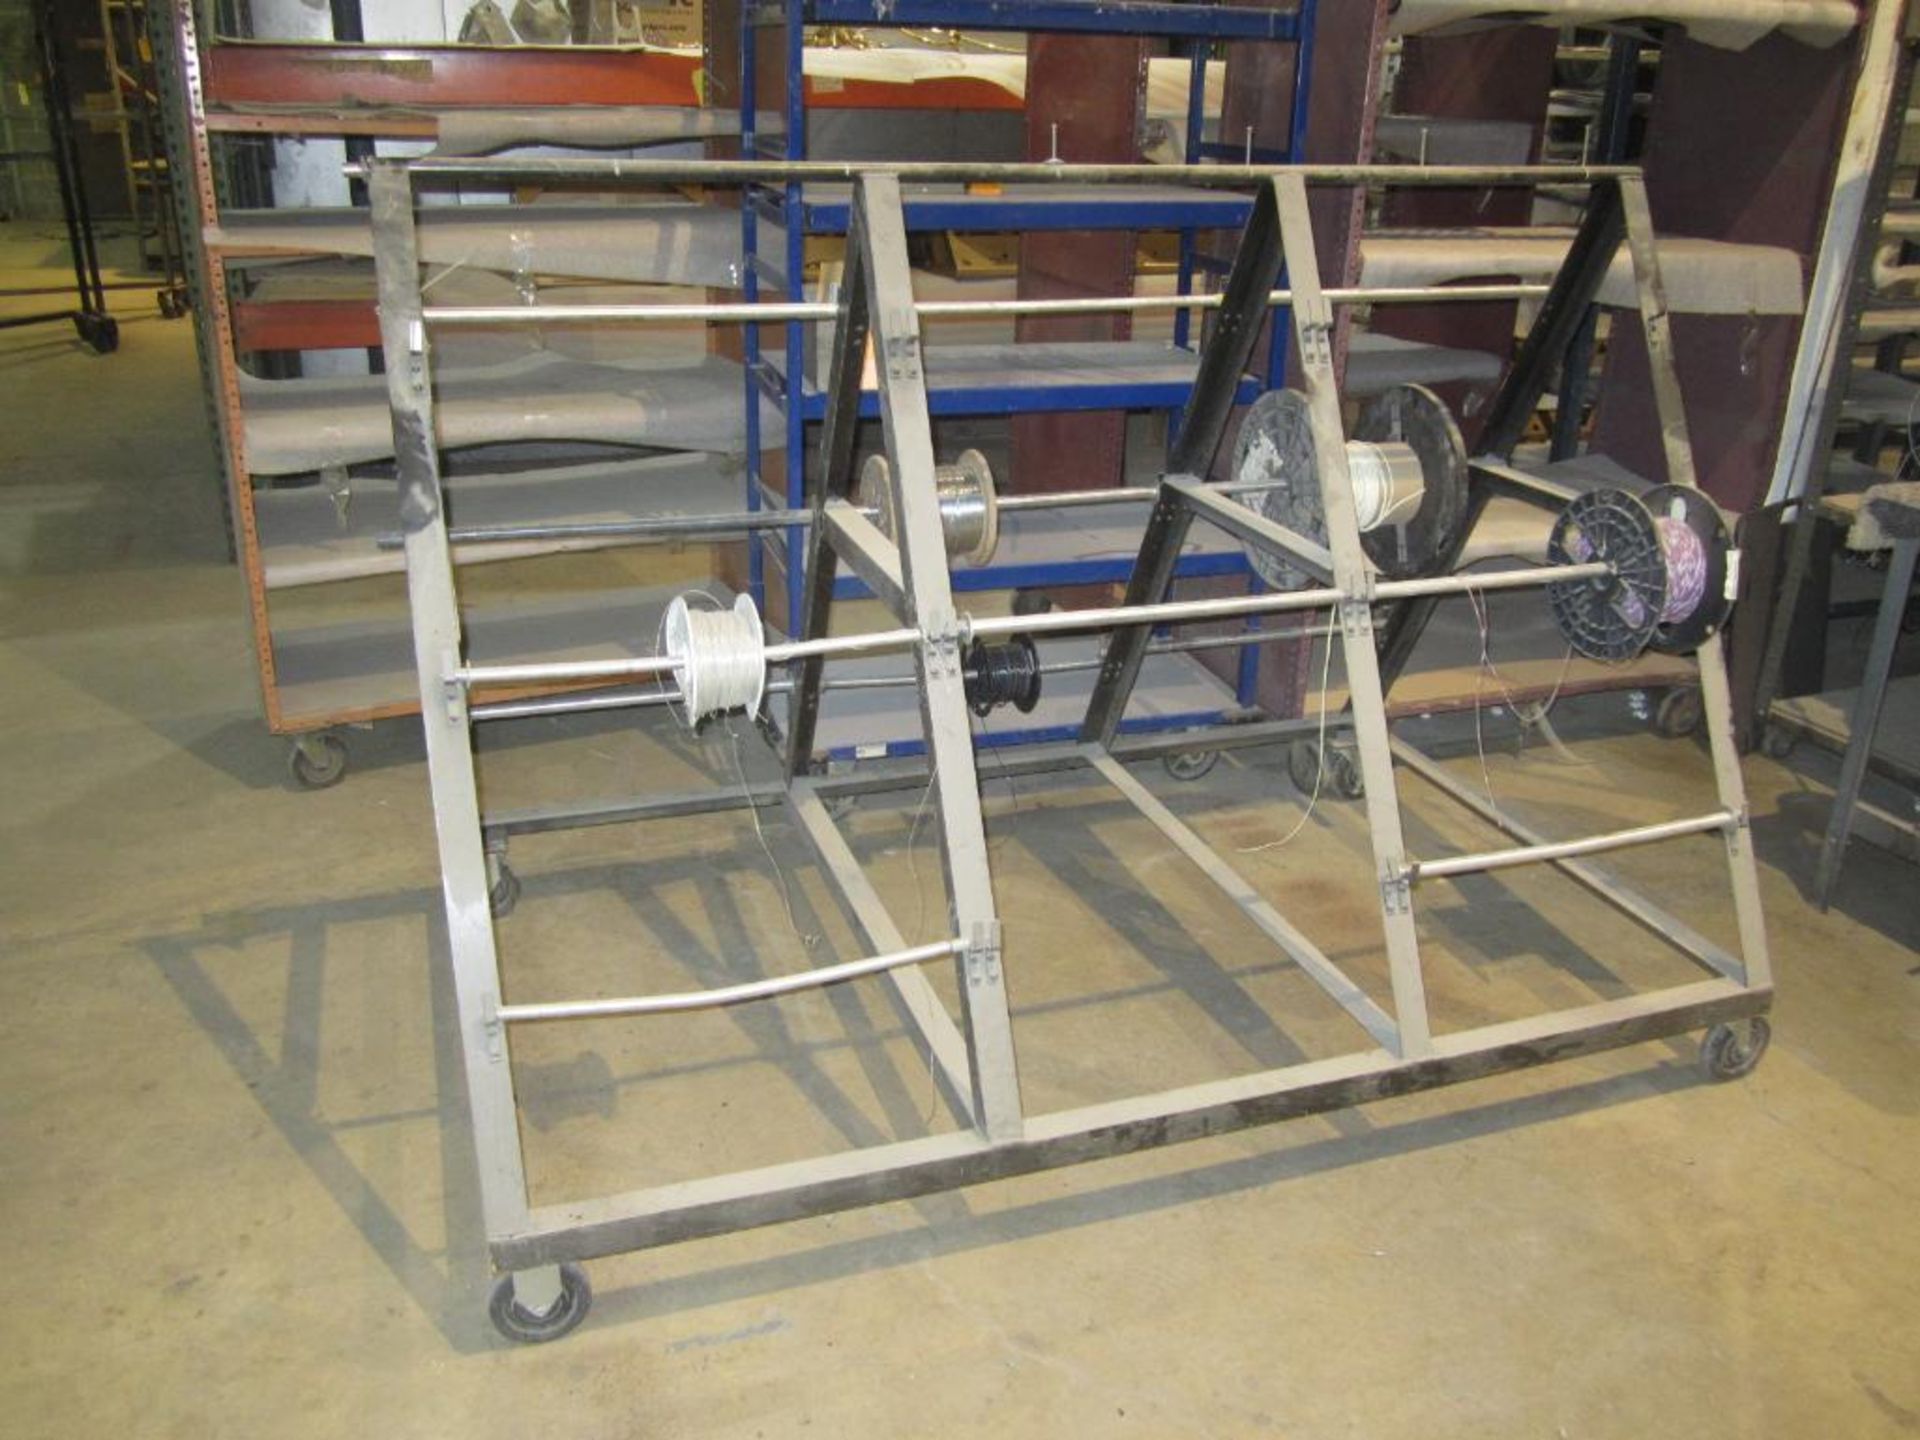 A frame metal rolling rack